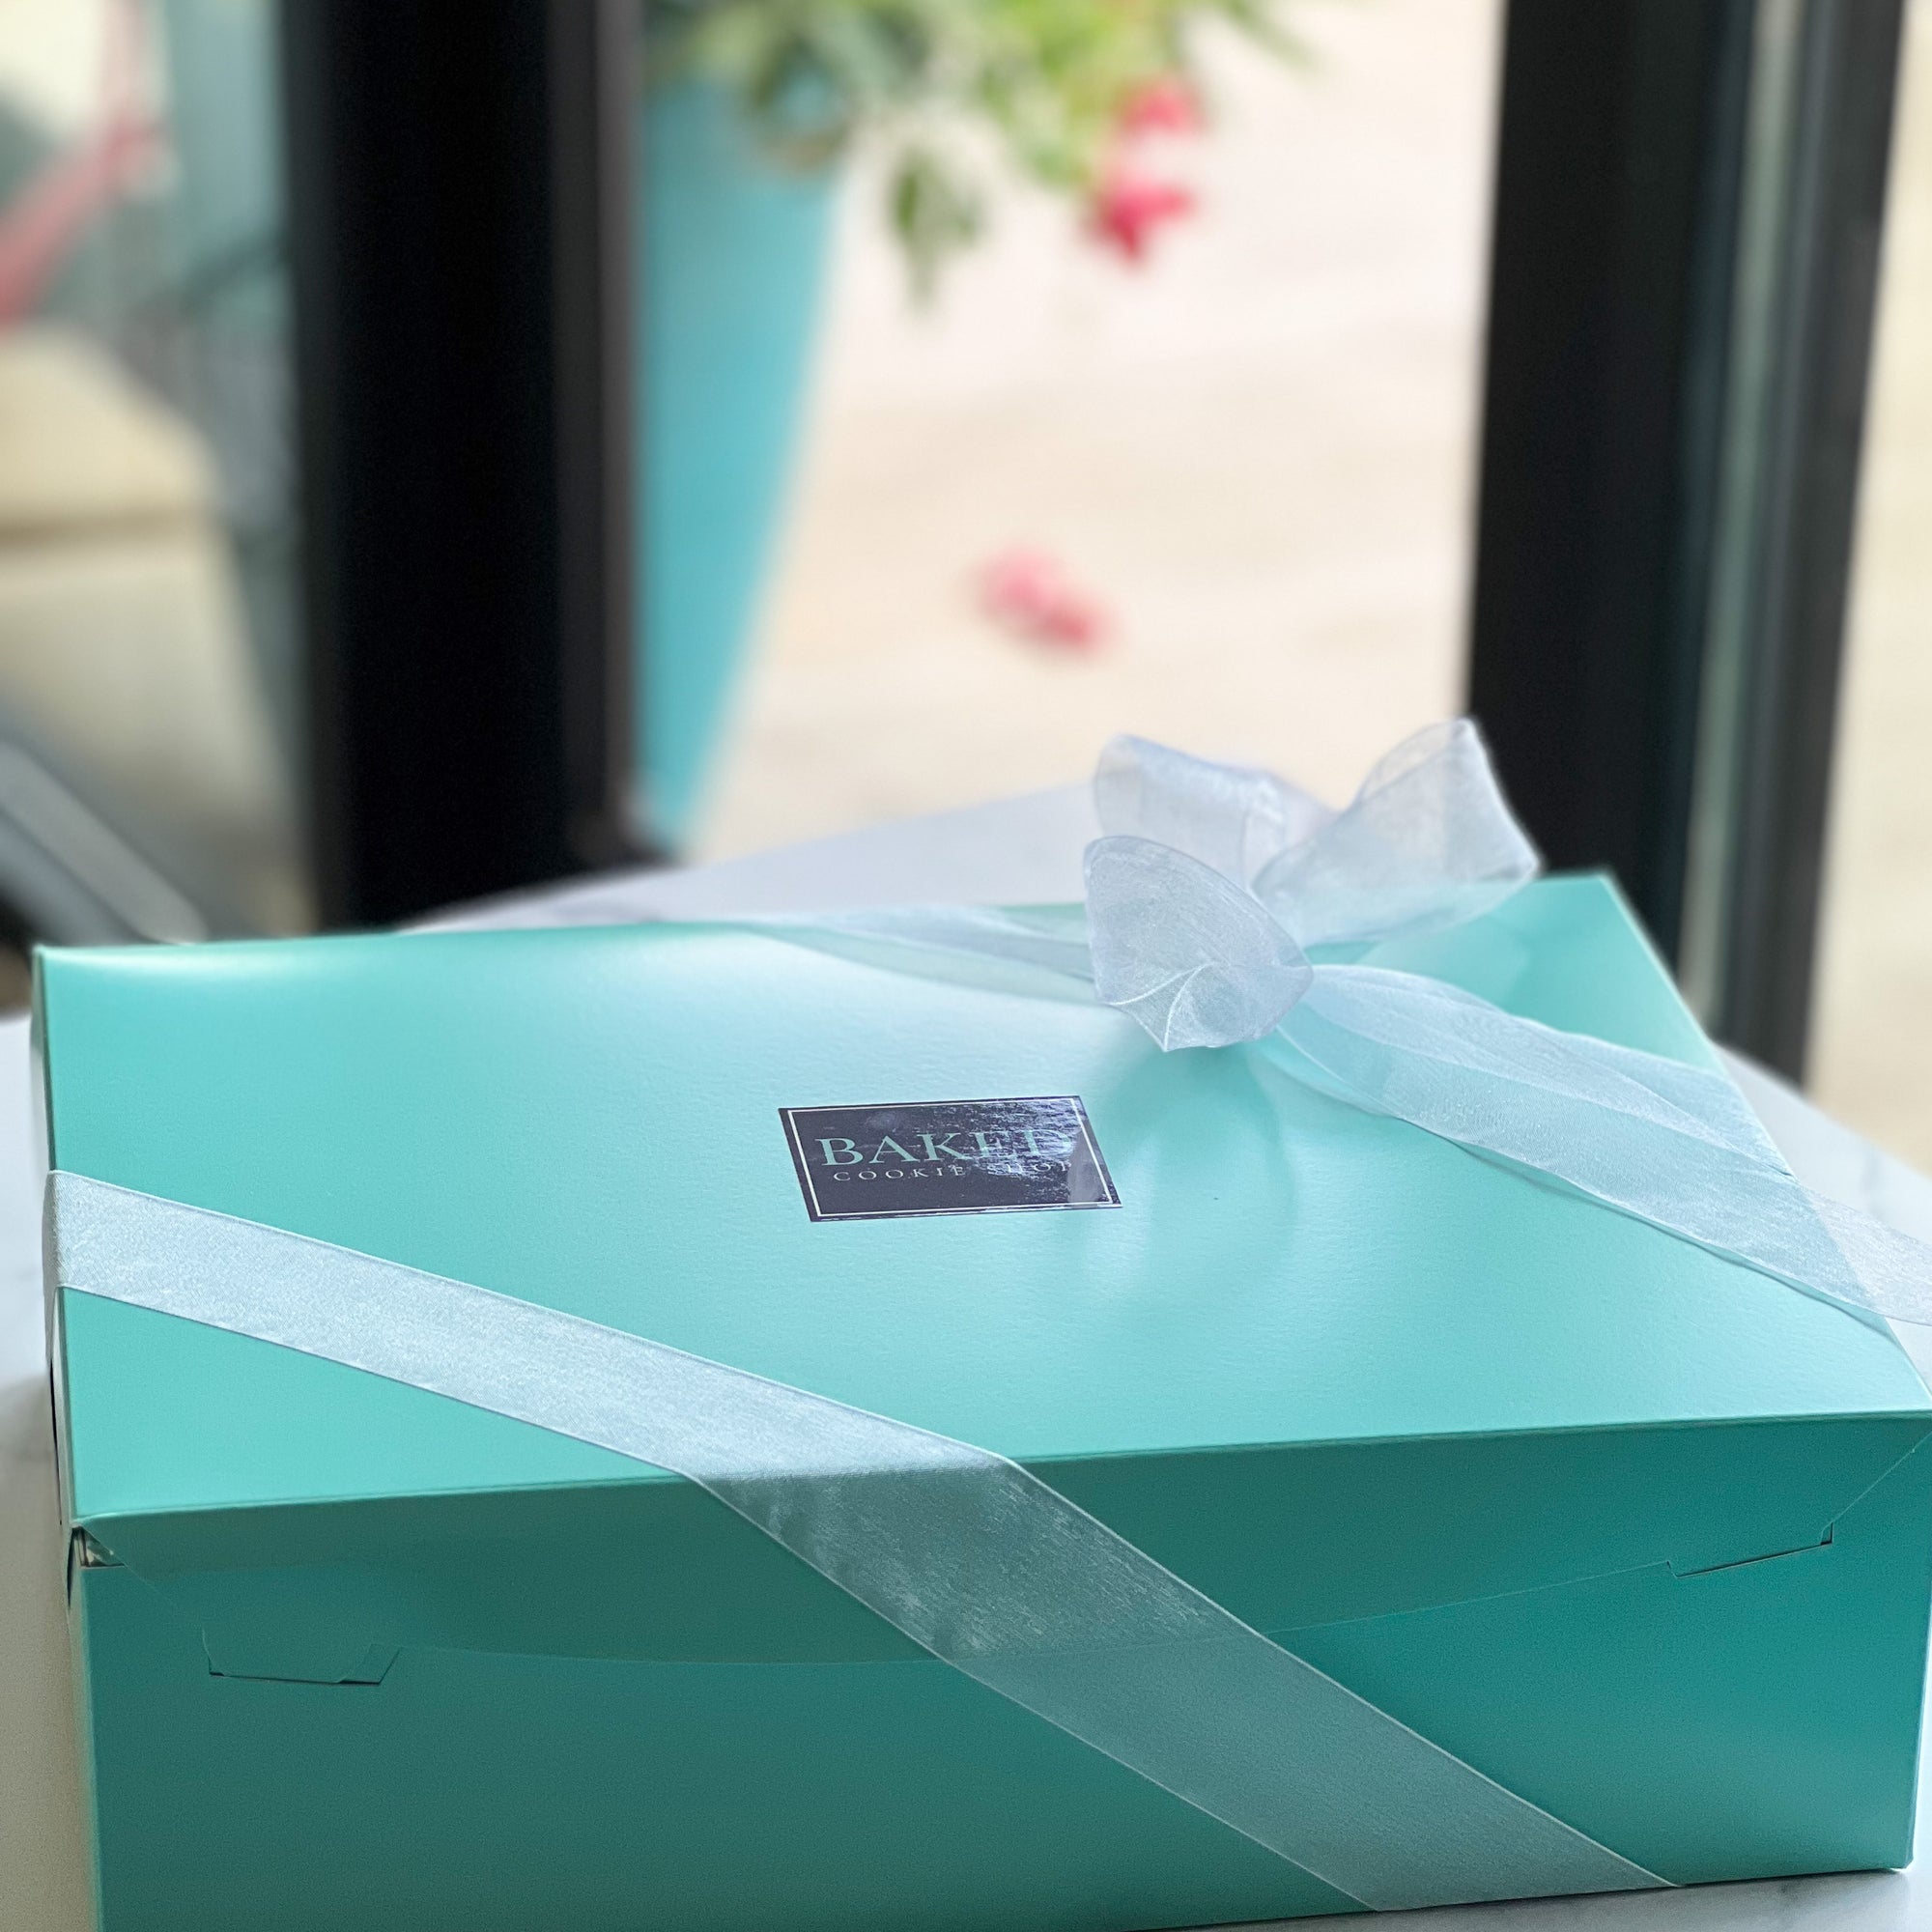 Baked Gift Box #6